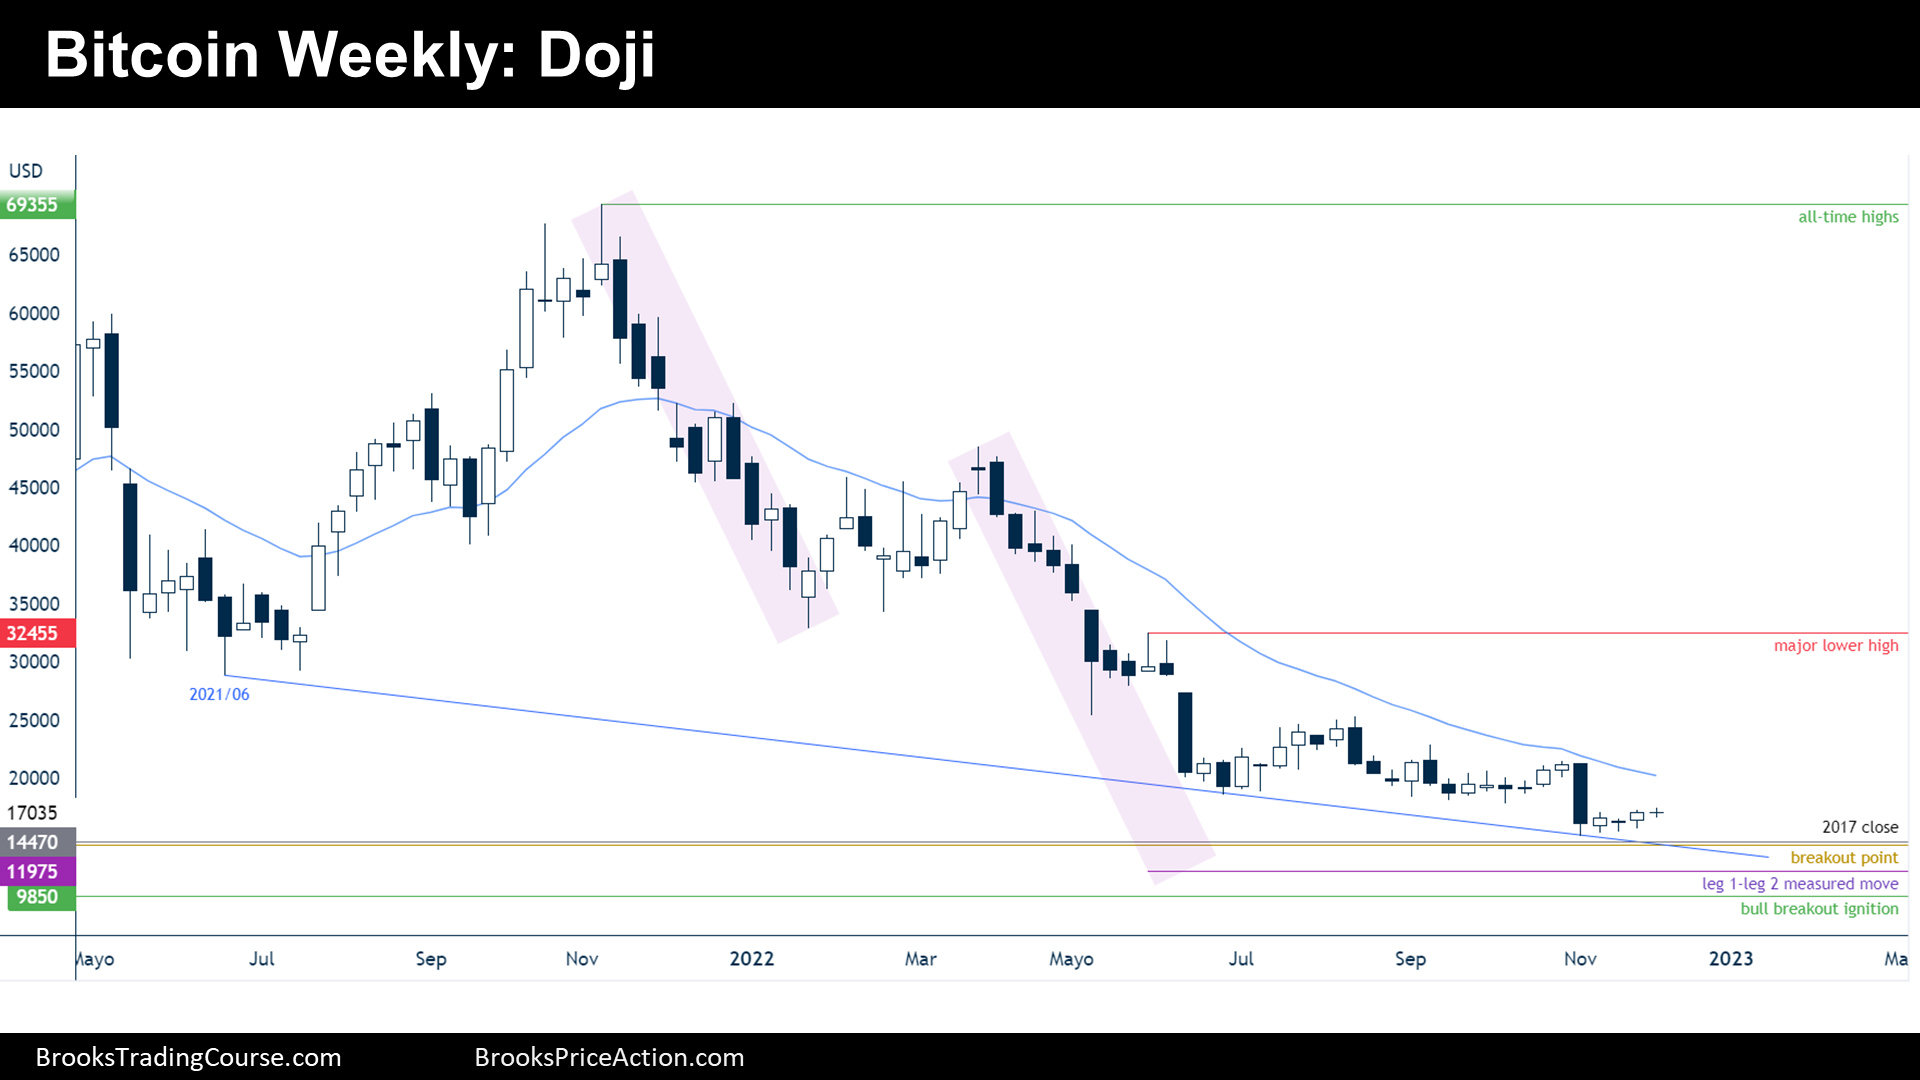 Bitcoin futures trading sideways and doji on weekly chart